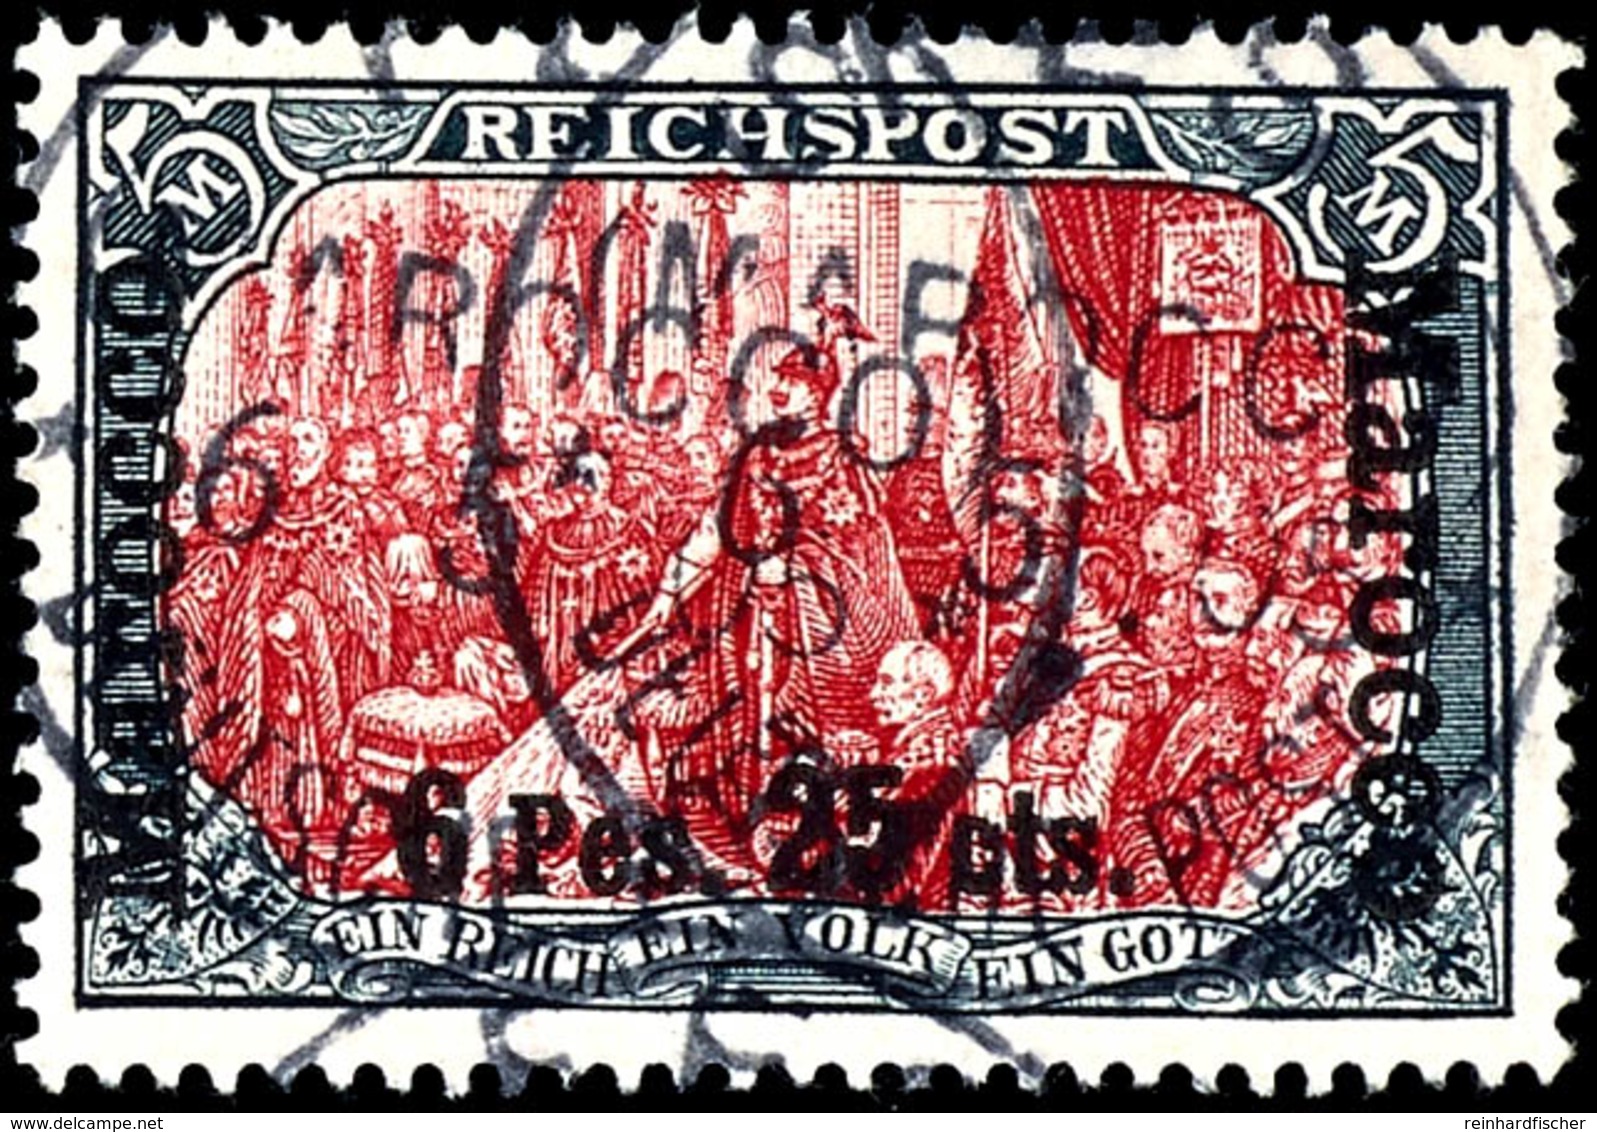 5 Mark Reichspost Mit Aufdruck "Marocco 6 Pes. 25 Cts." In Type II, Tadellose Marke, Gestempelt "FES", Michel  340,-, Ka - Marocco (uffici)